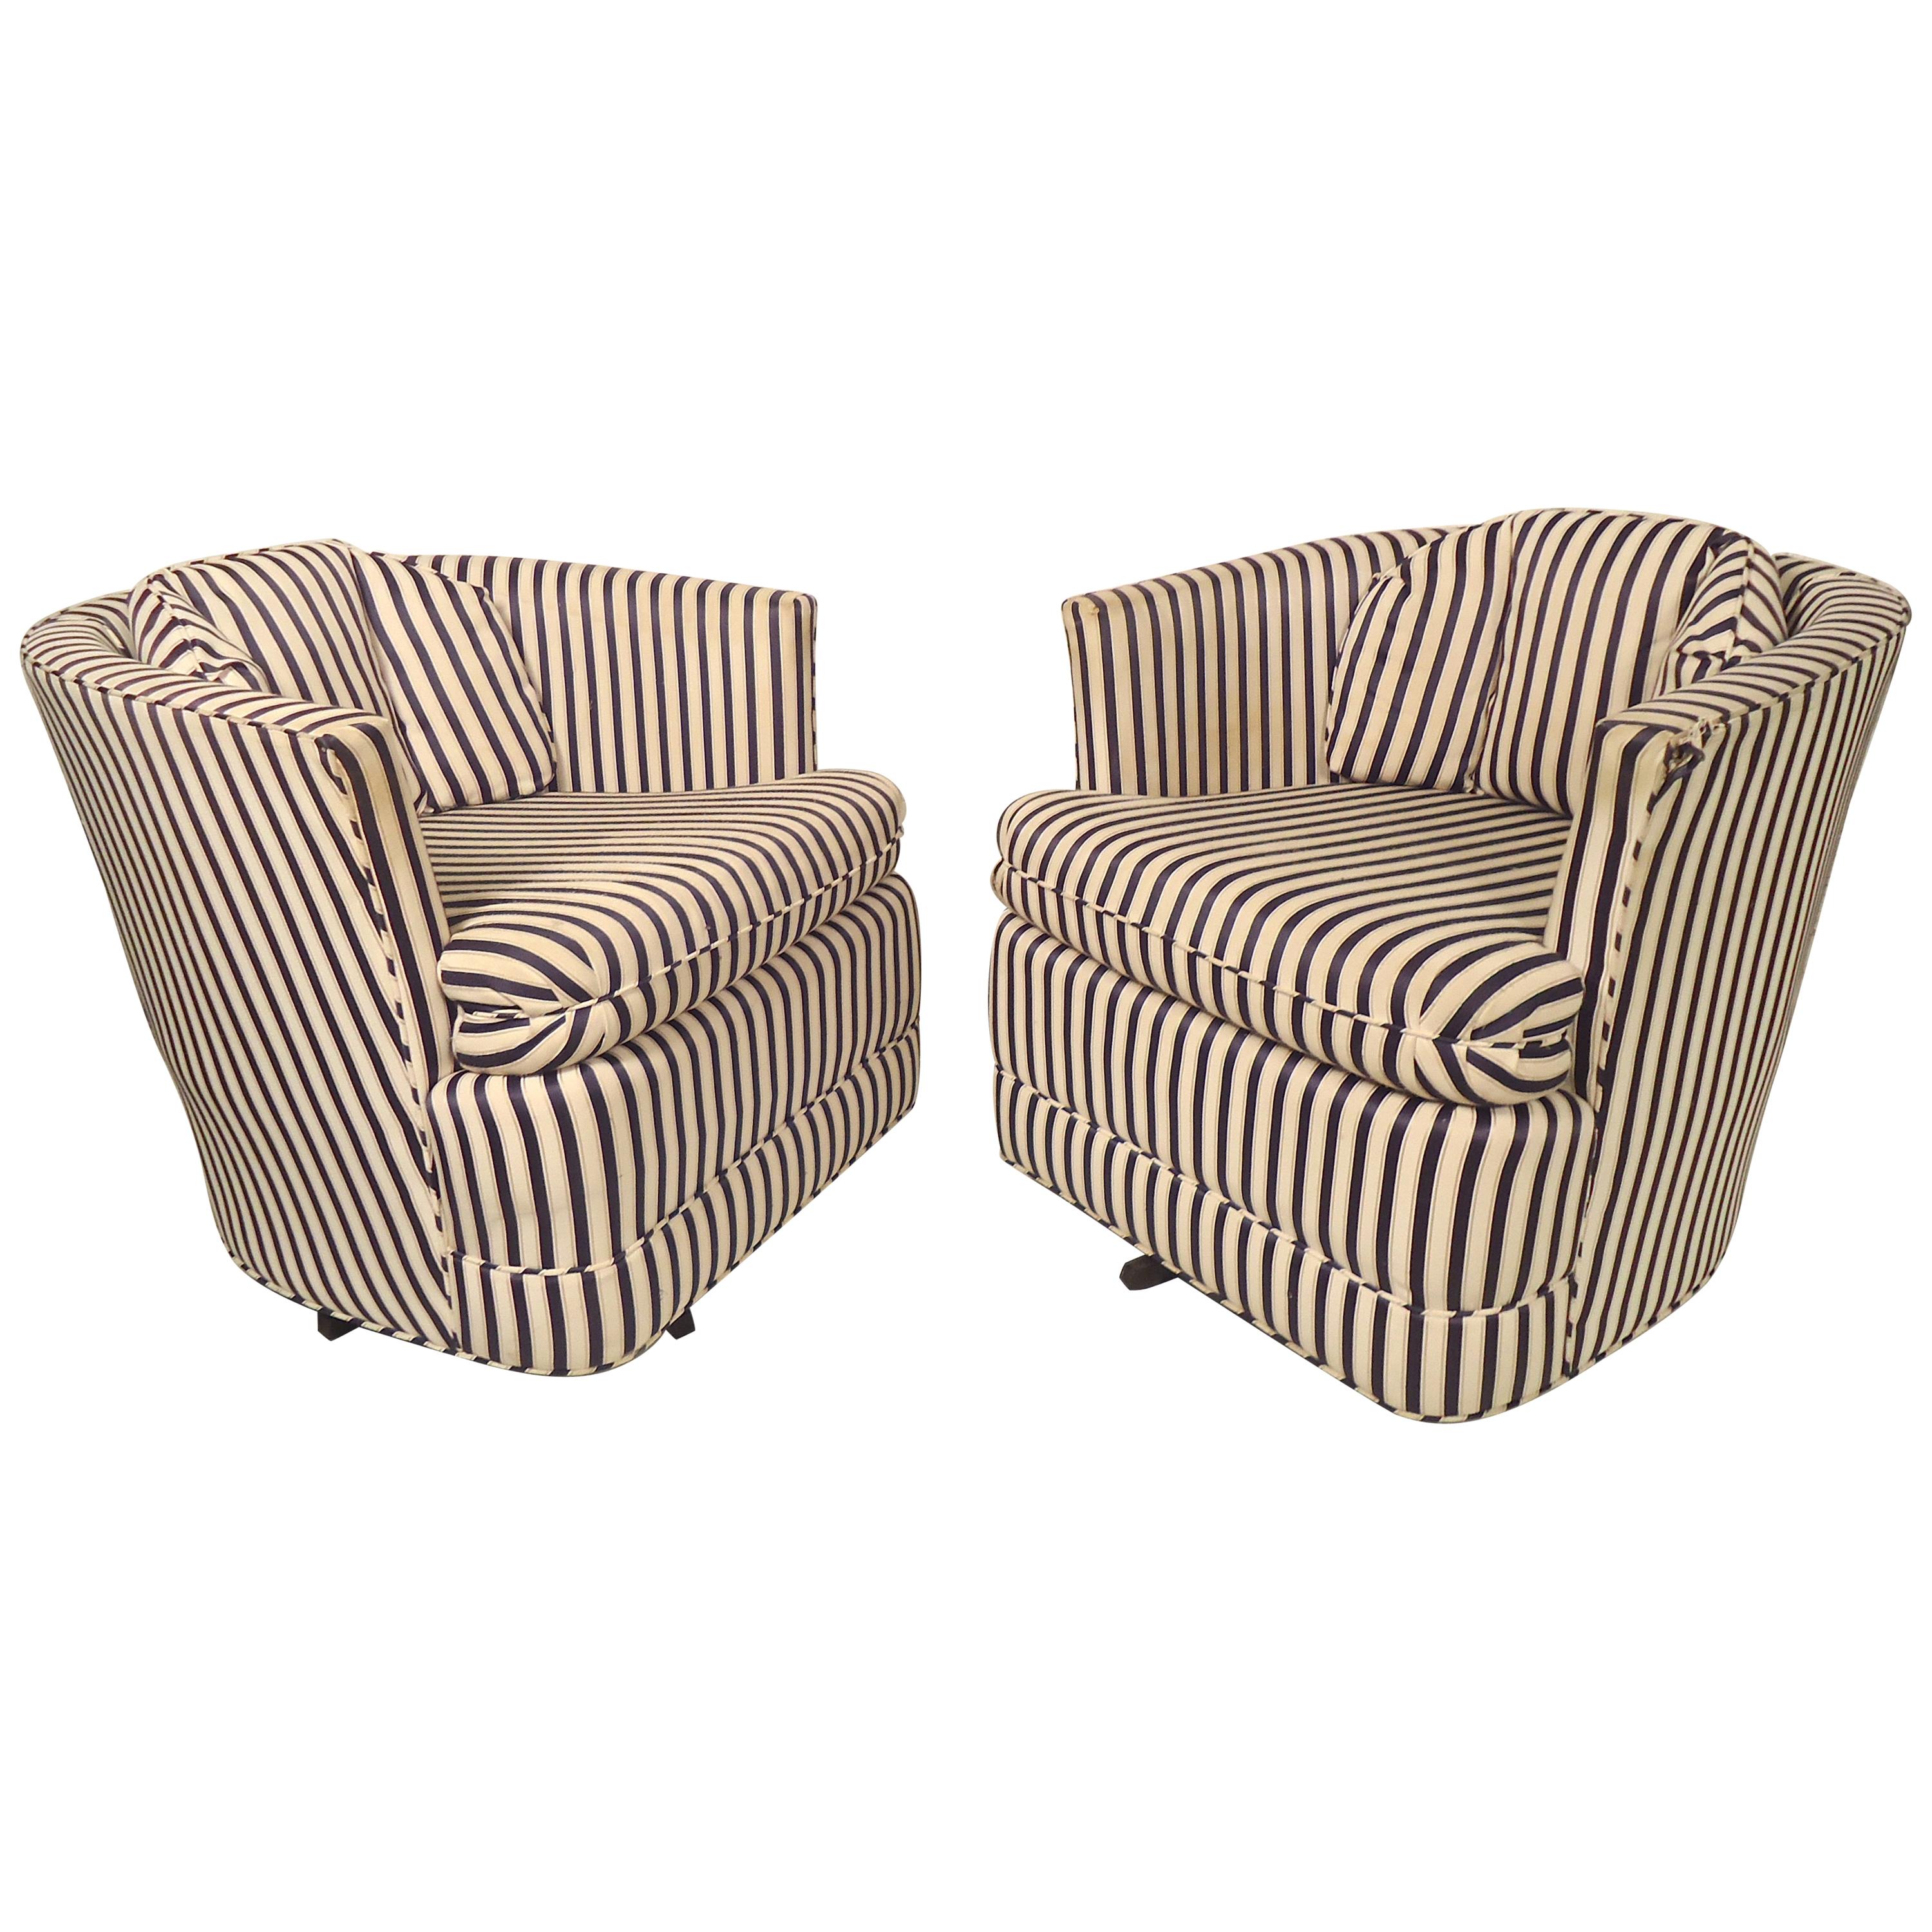 Pair of Mid-Century Modern Swivel Chairs